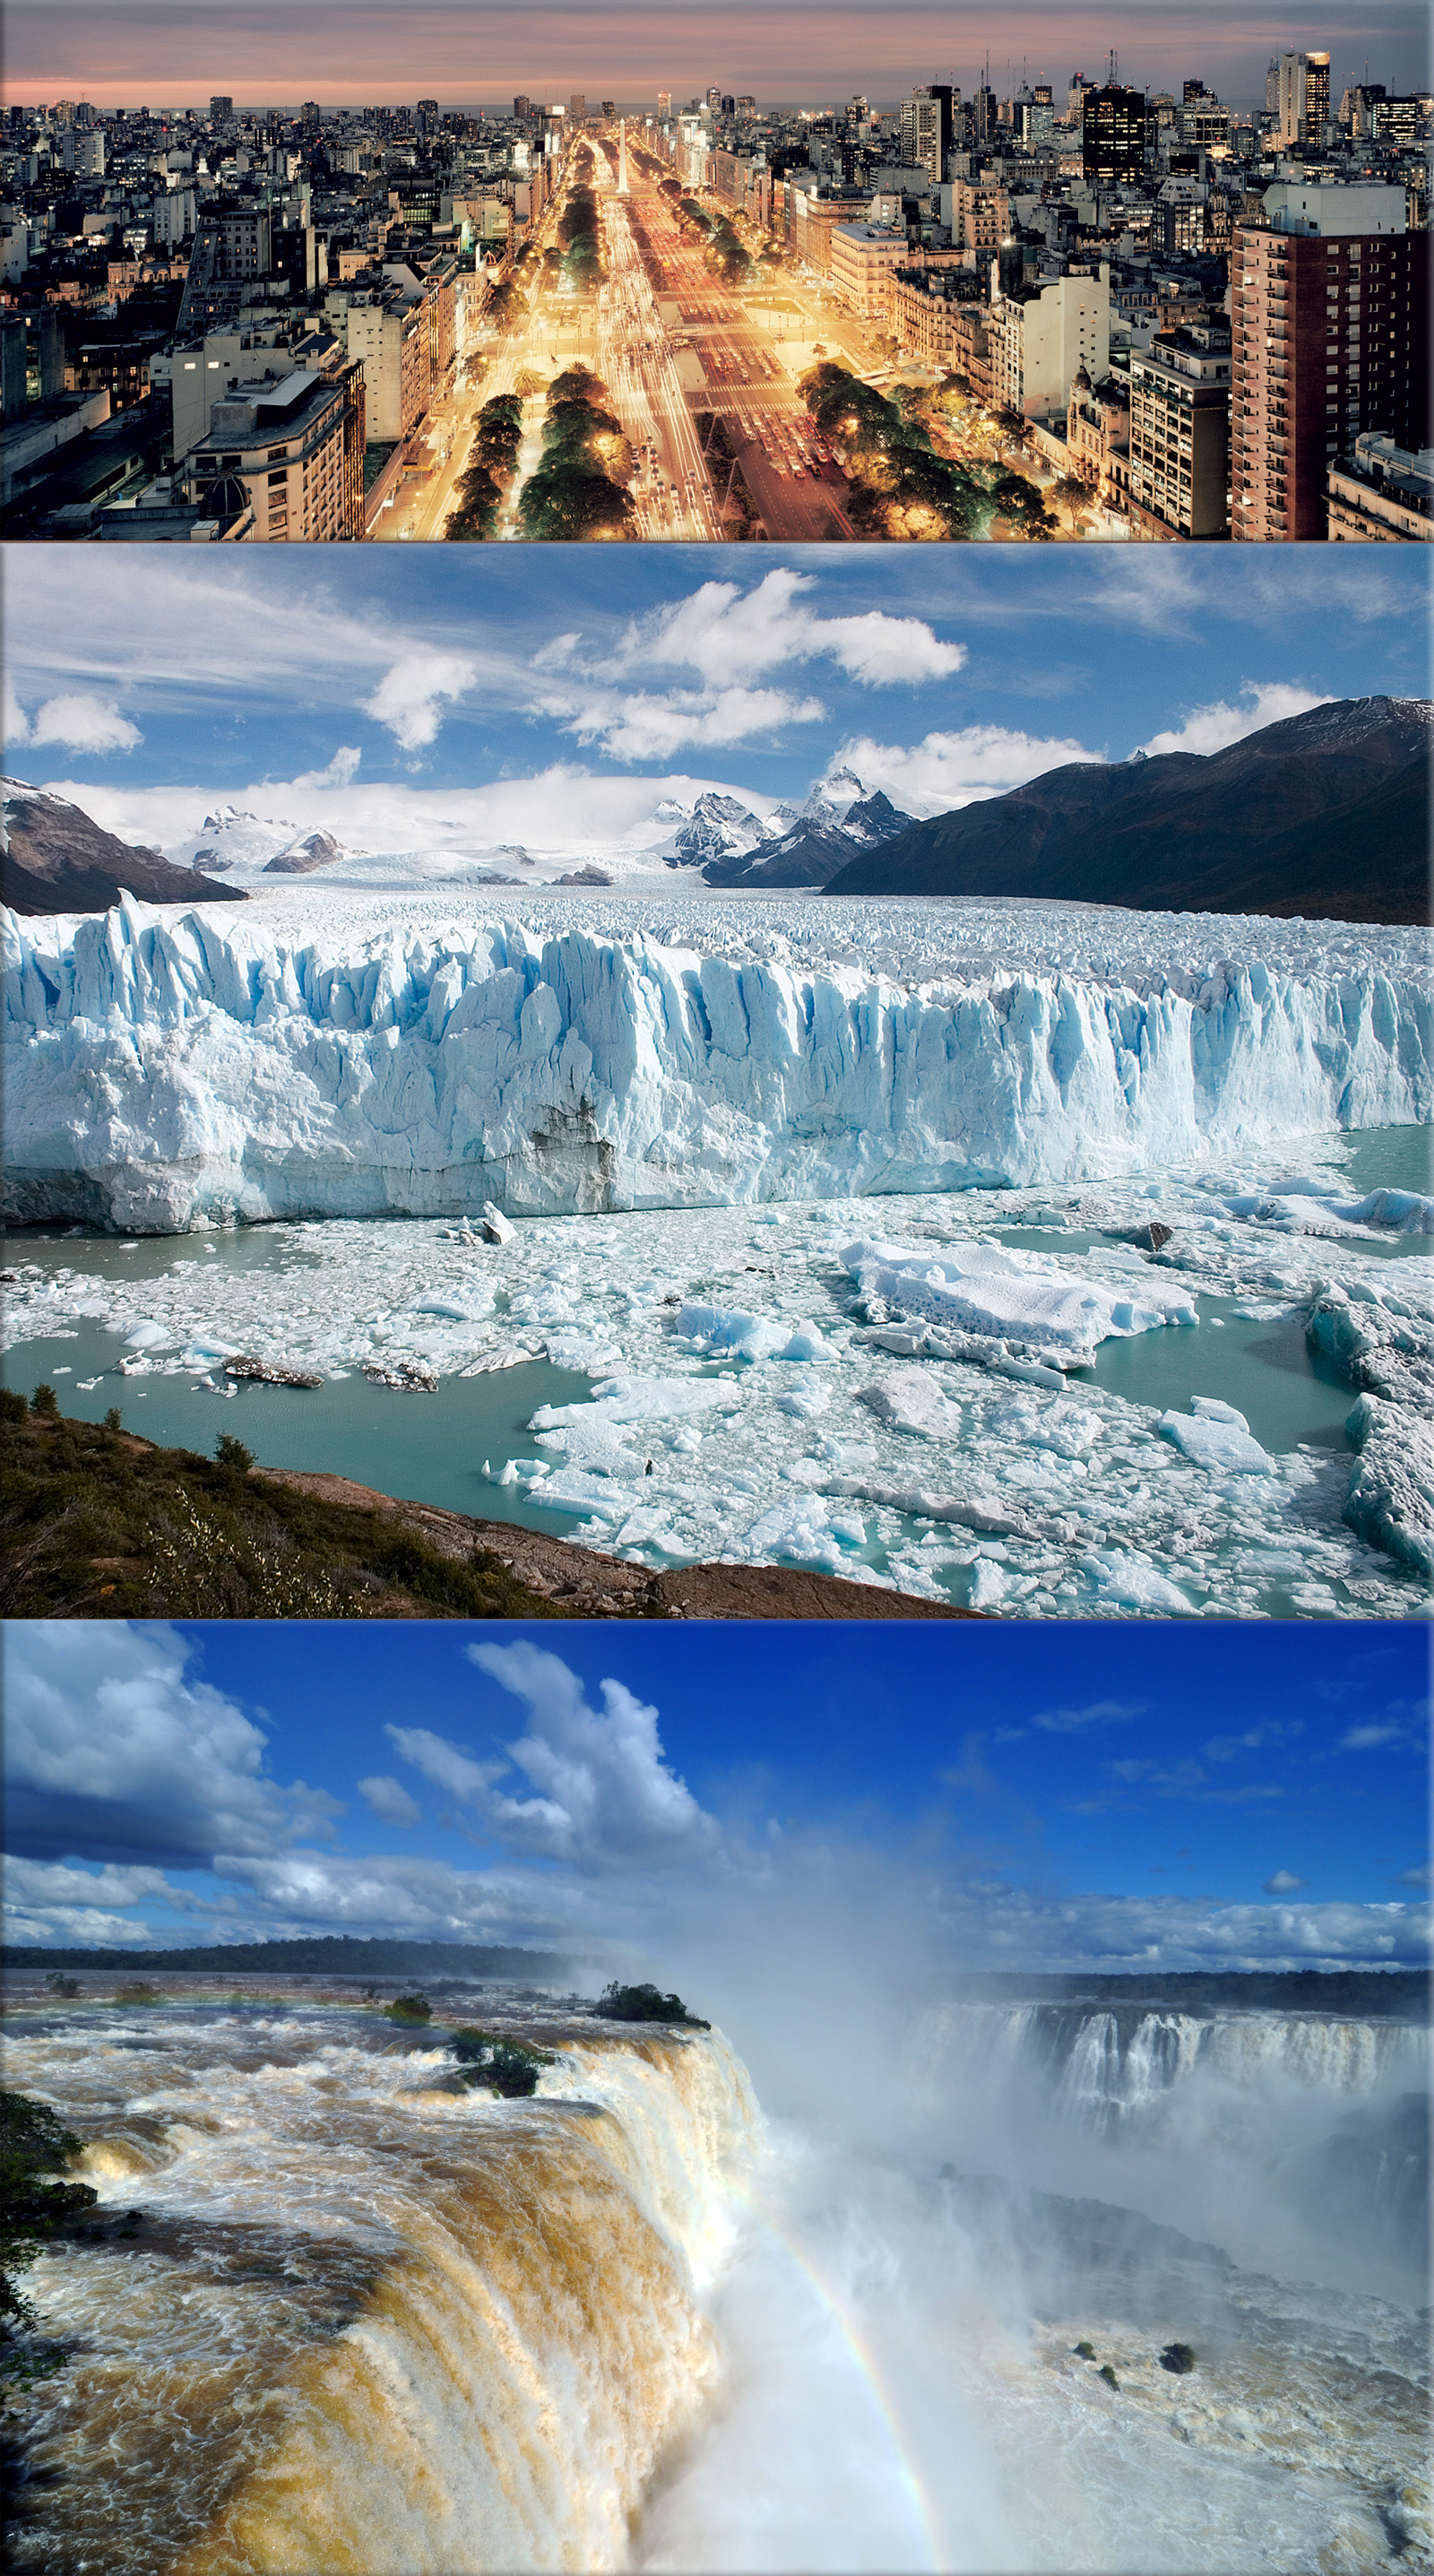 Argentina: Buenos Aires, capital and largest city of Argentina; ● Perito Moreno Glacier Patagonia Argentina ● Iguazu Falls (Iguazu River forms the boundary between Argentina and Brazil)